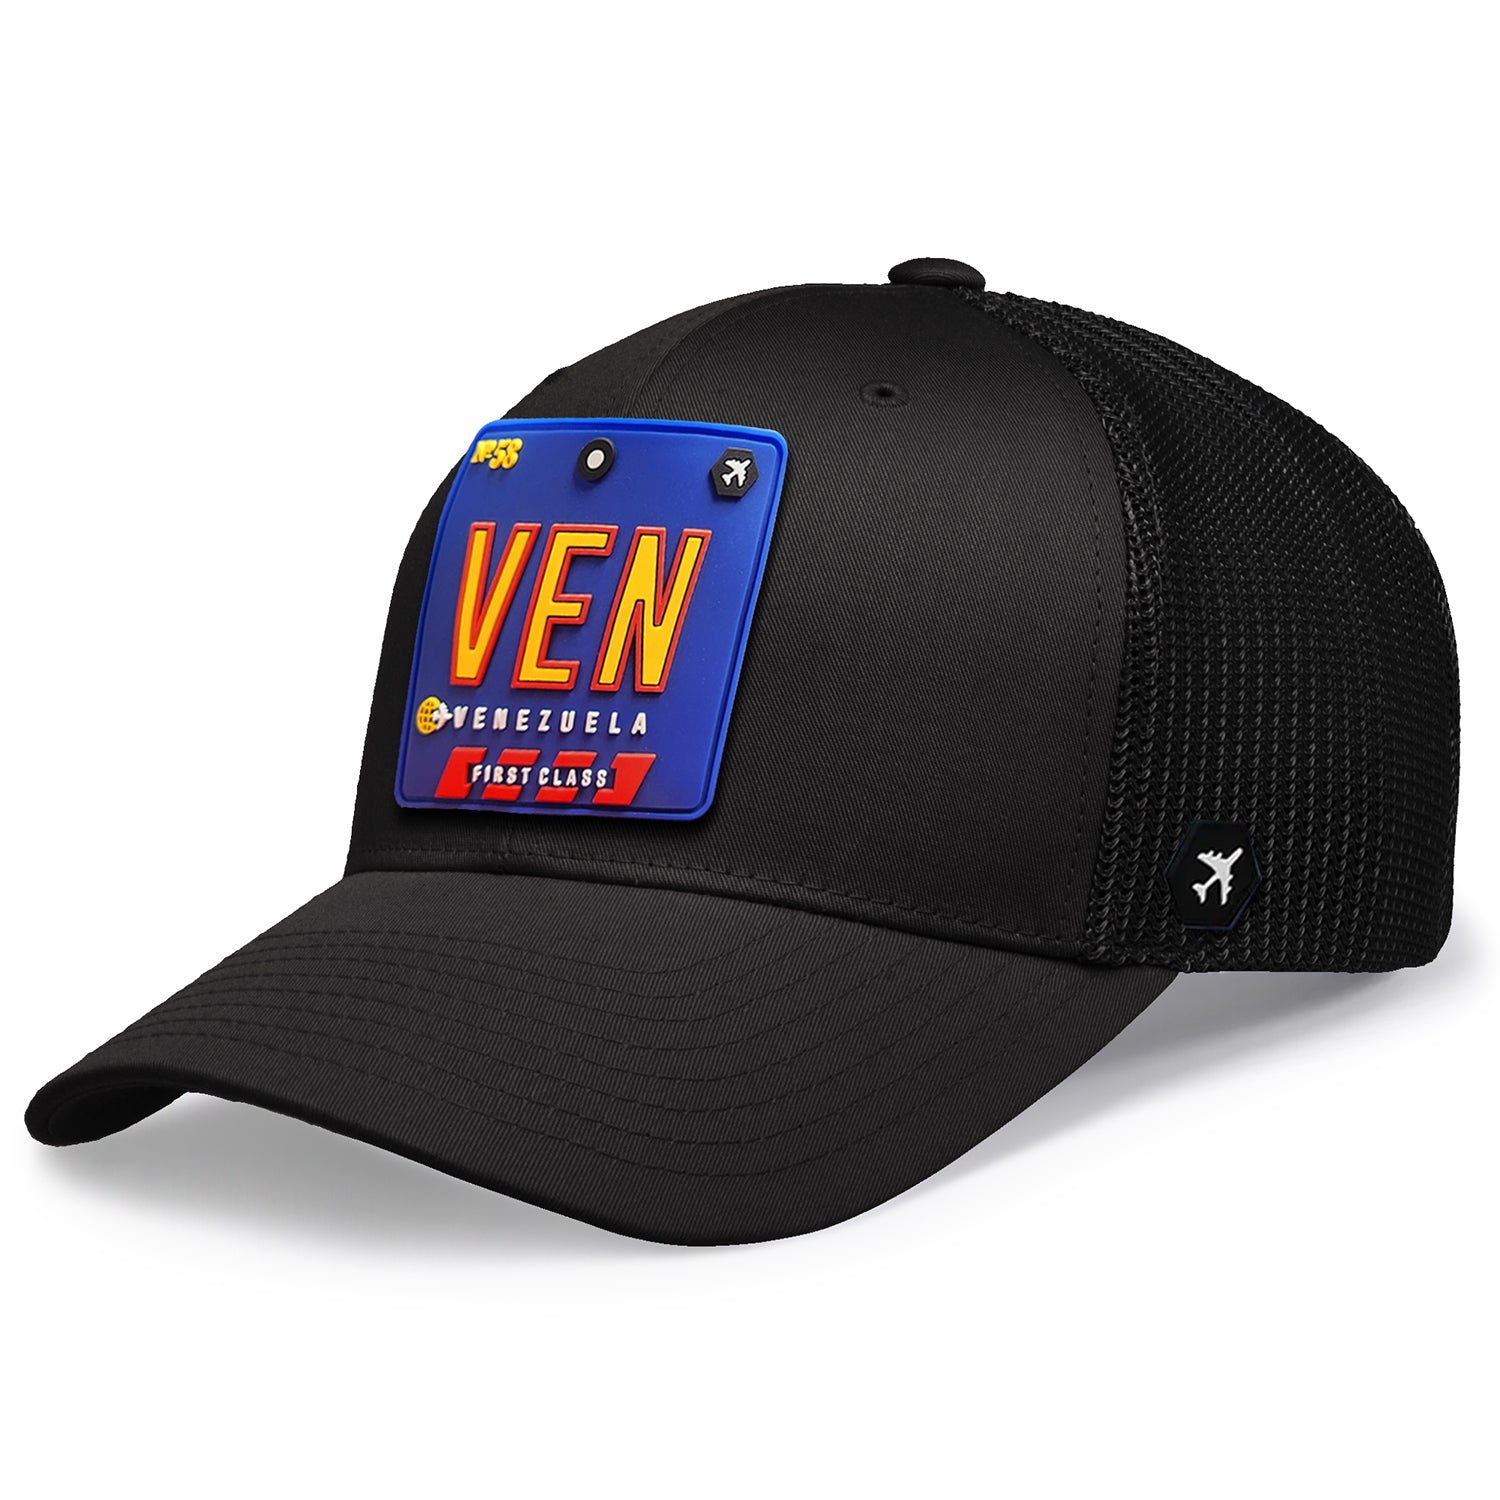 VEN - Venezuela Trucker Hat Black/Tricolor